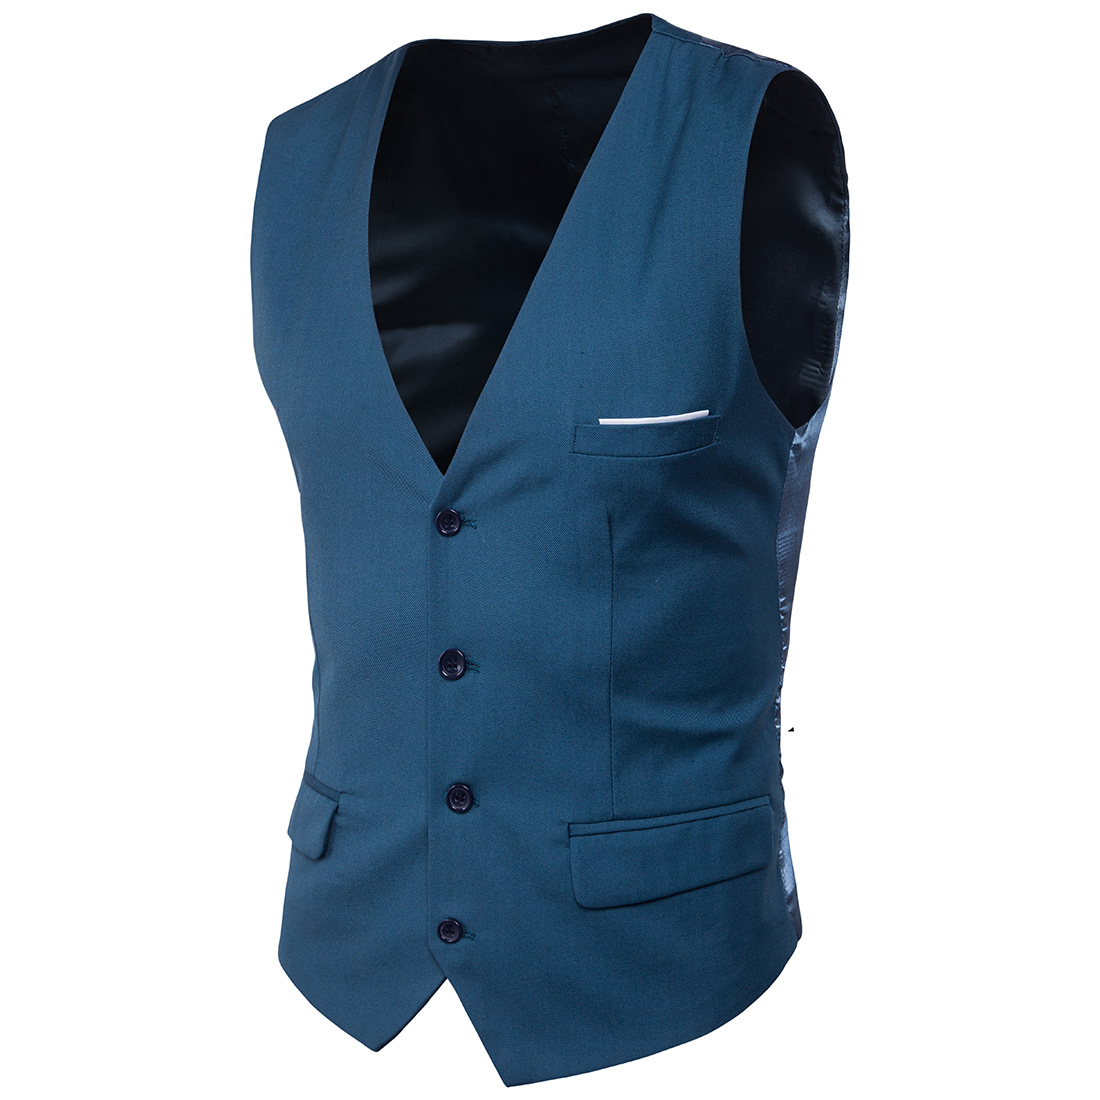  Men Suit Waistcoat Single Breasted Vest Jacket Casual Business Slim Fit Sleeveless Coat blue